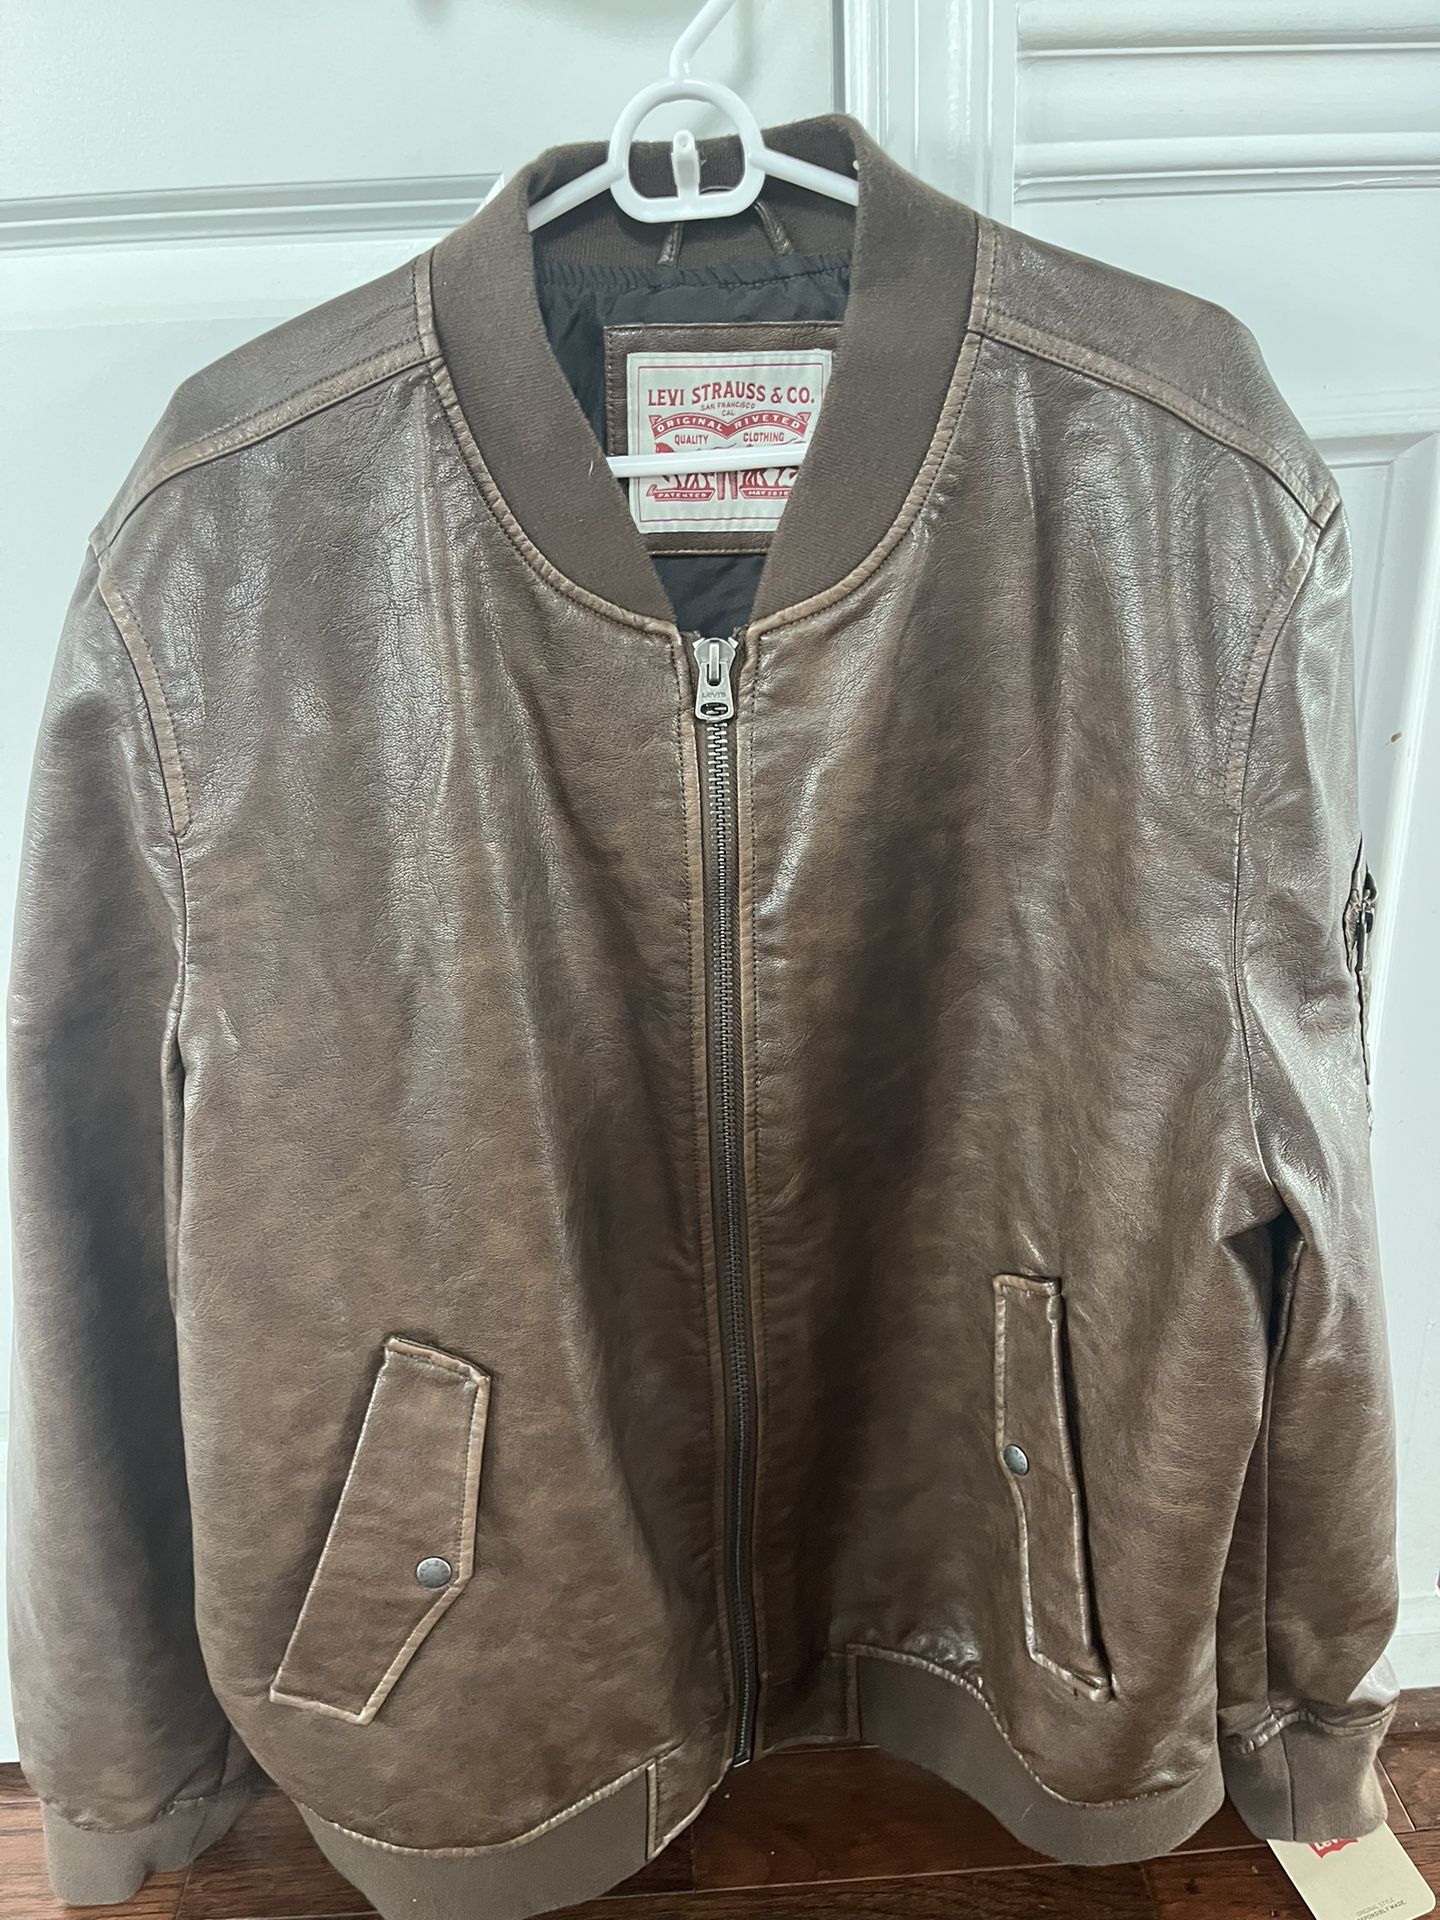 Levis Leather Jacket Original Price $250